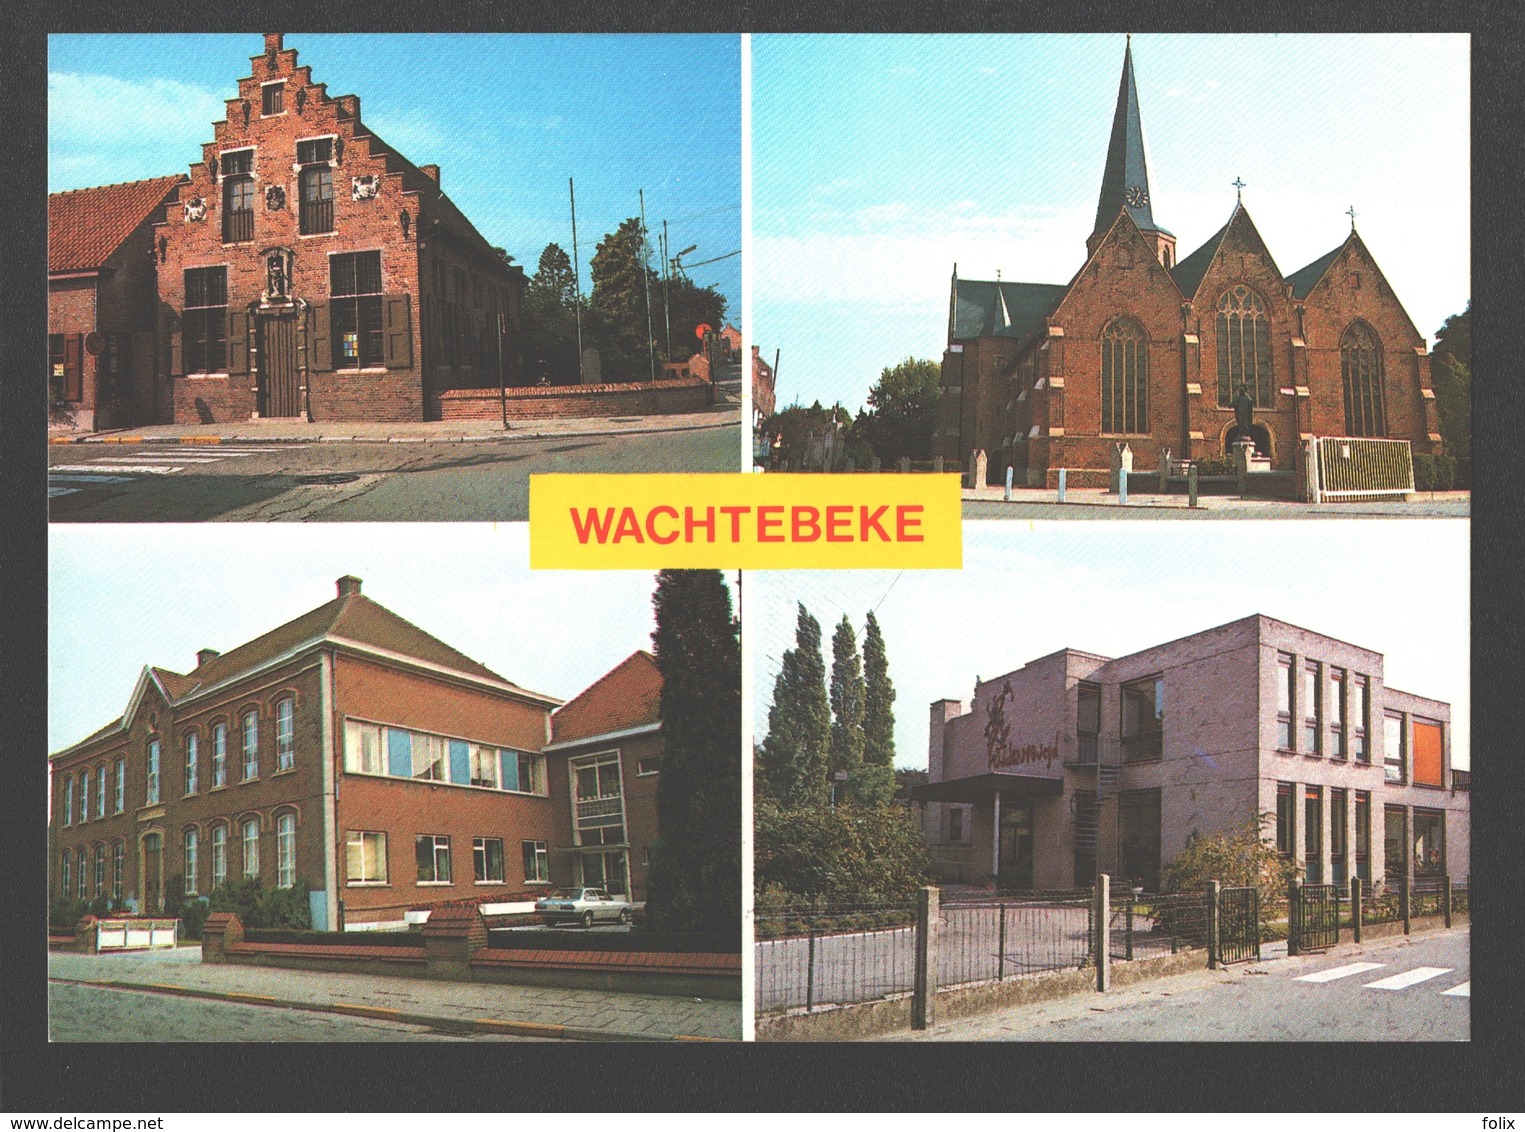 Wachtebeke - Vierschaar - Rustoord De Mey - Kerk Sint-Catharina - Kinderkribbe Kindervreugd - Wachtebeke